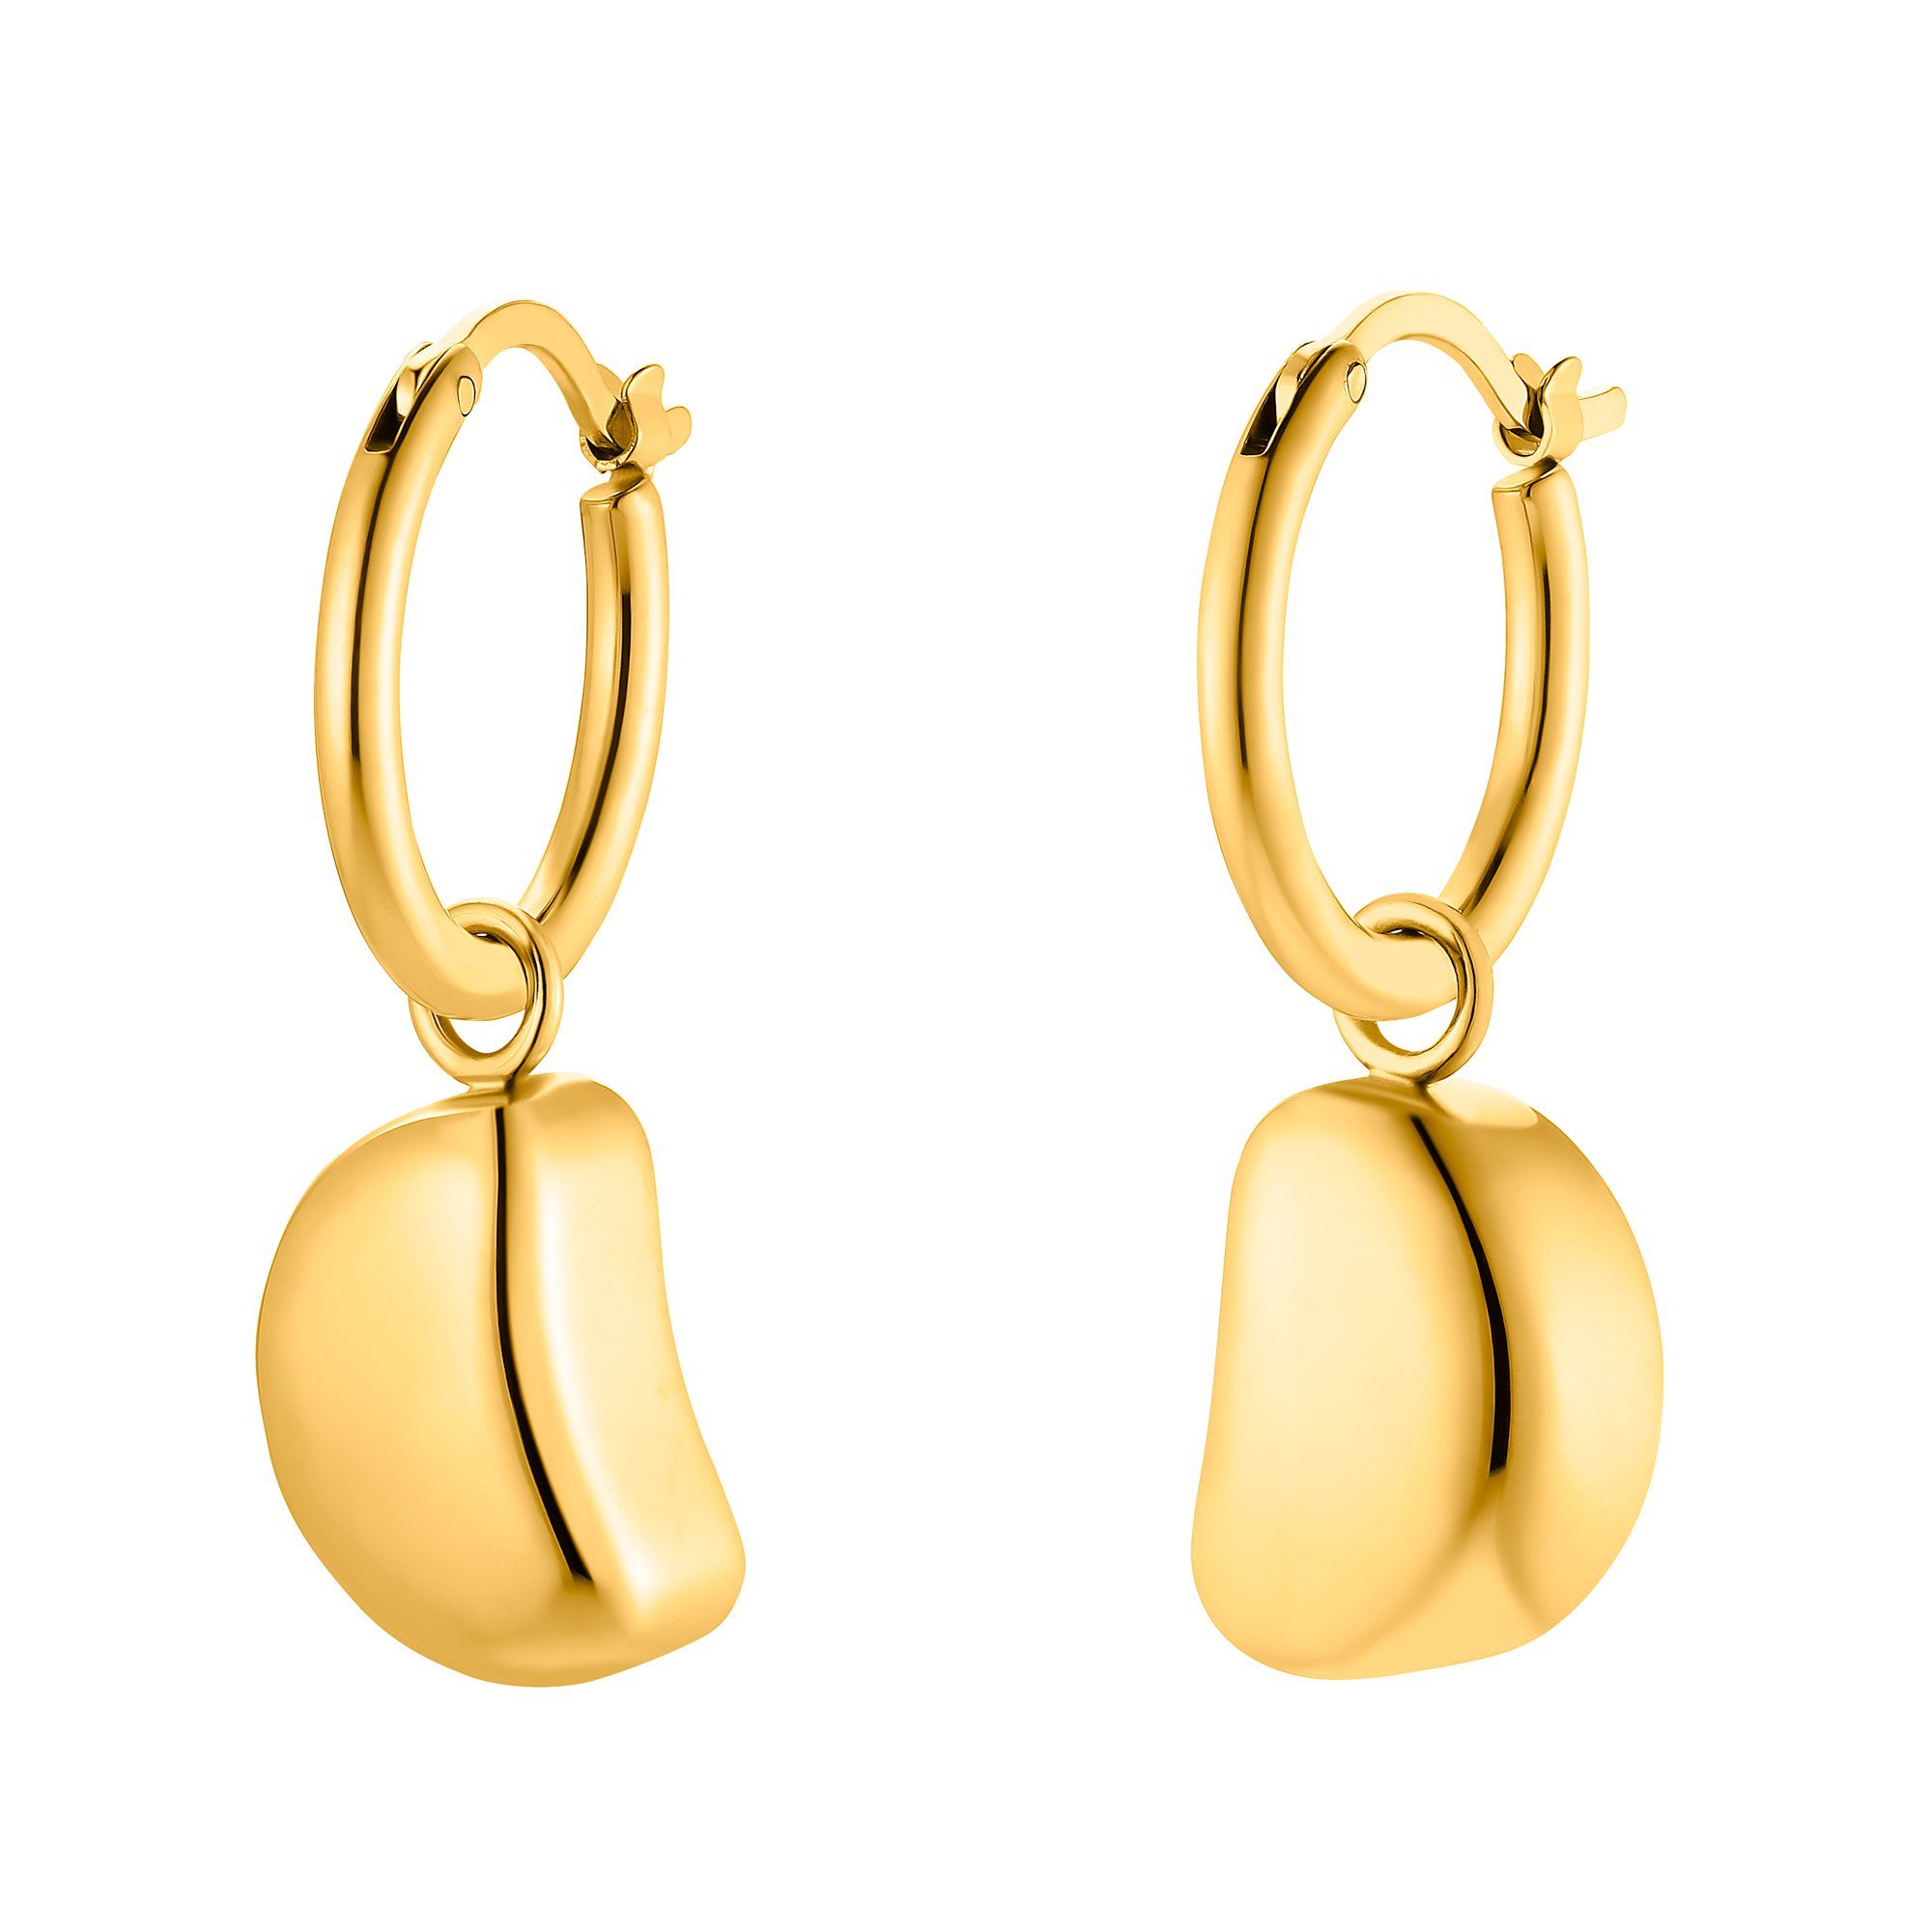 Heideman Paar Ohrstecker Bennet goldfarben (Ohrringe, inkl. Geschenkverpackung), Ohrringe mit Mond Anhänger